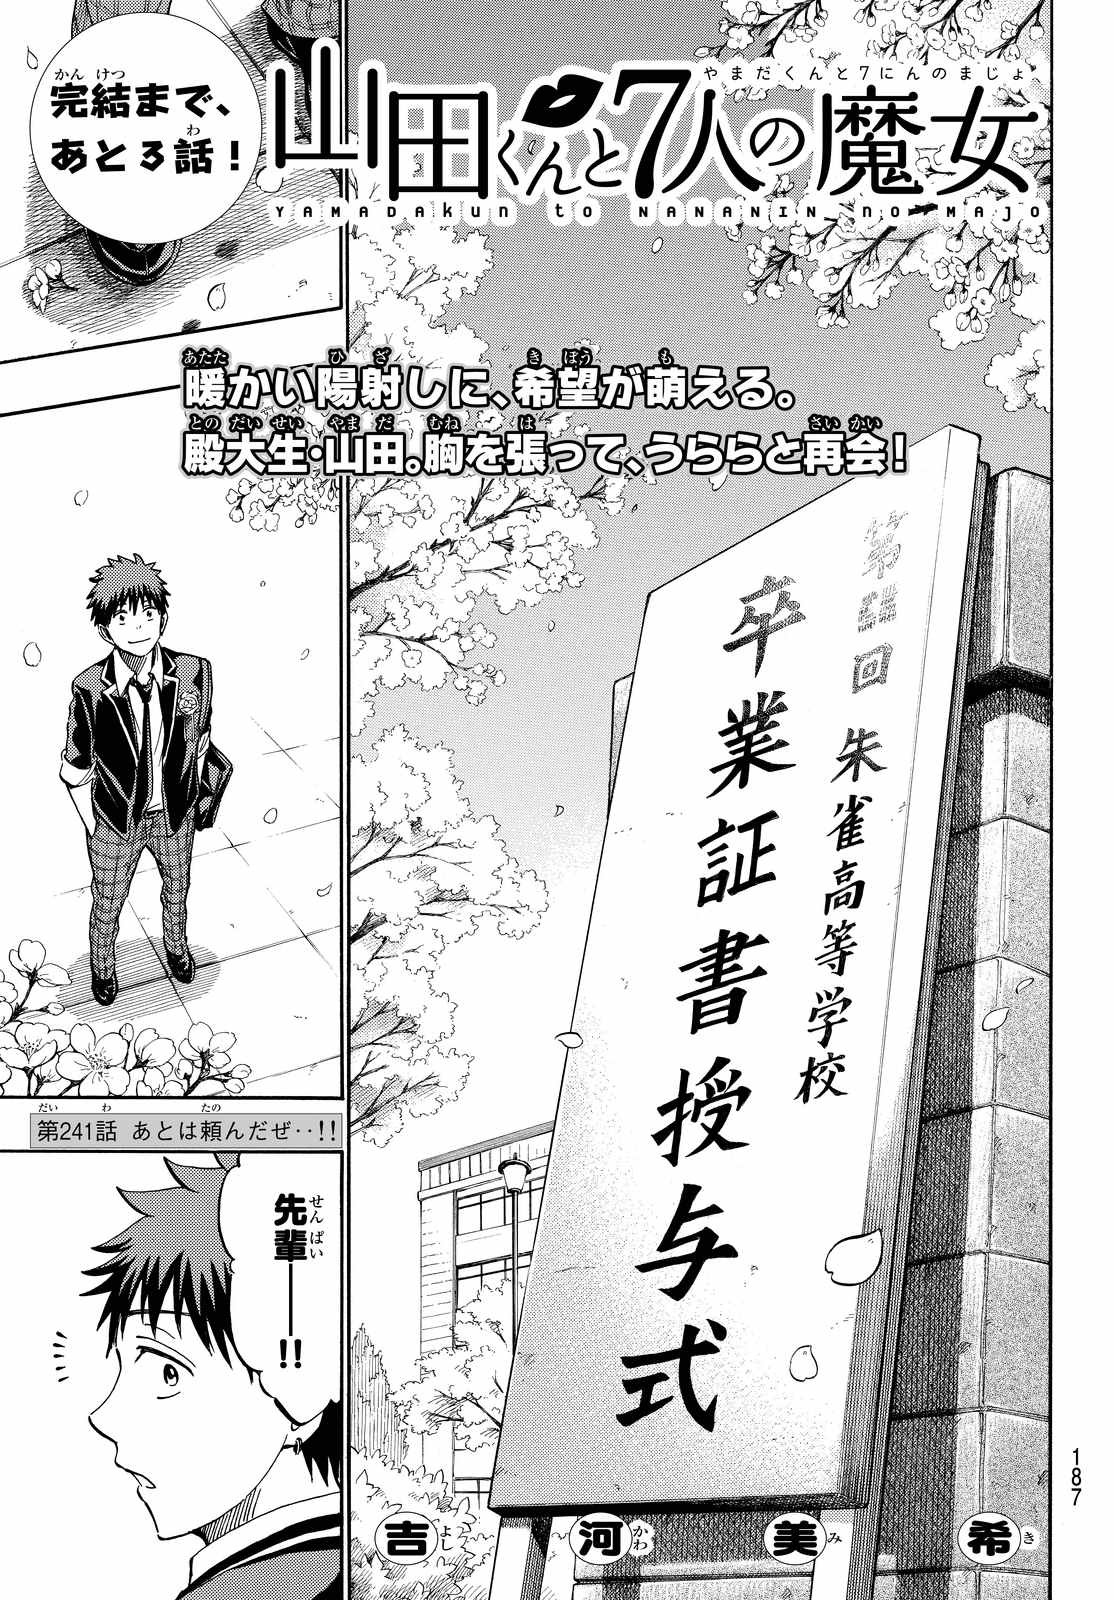 Yamada-kun to 7-nin no Majo - Chapter 241 - Page 1